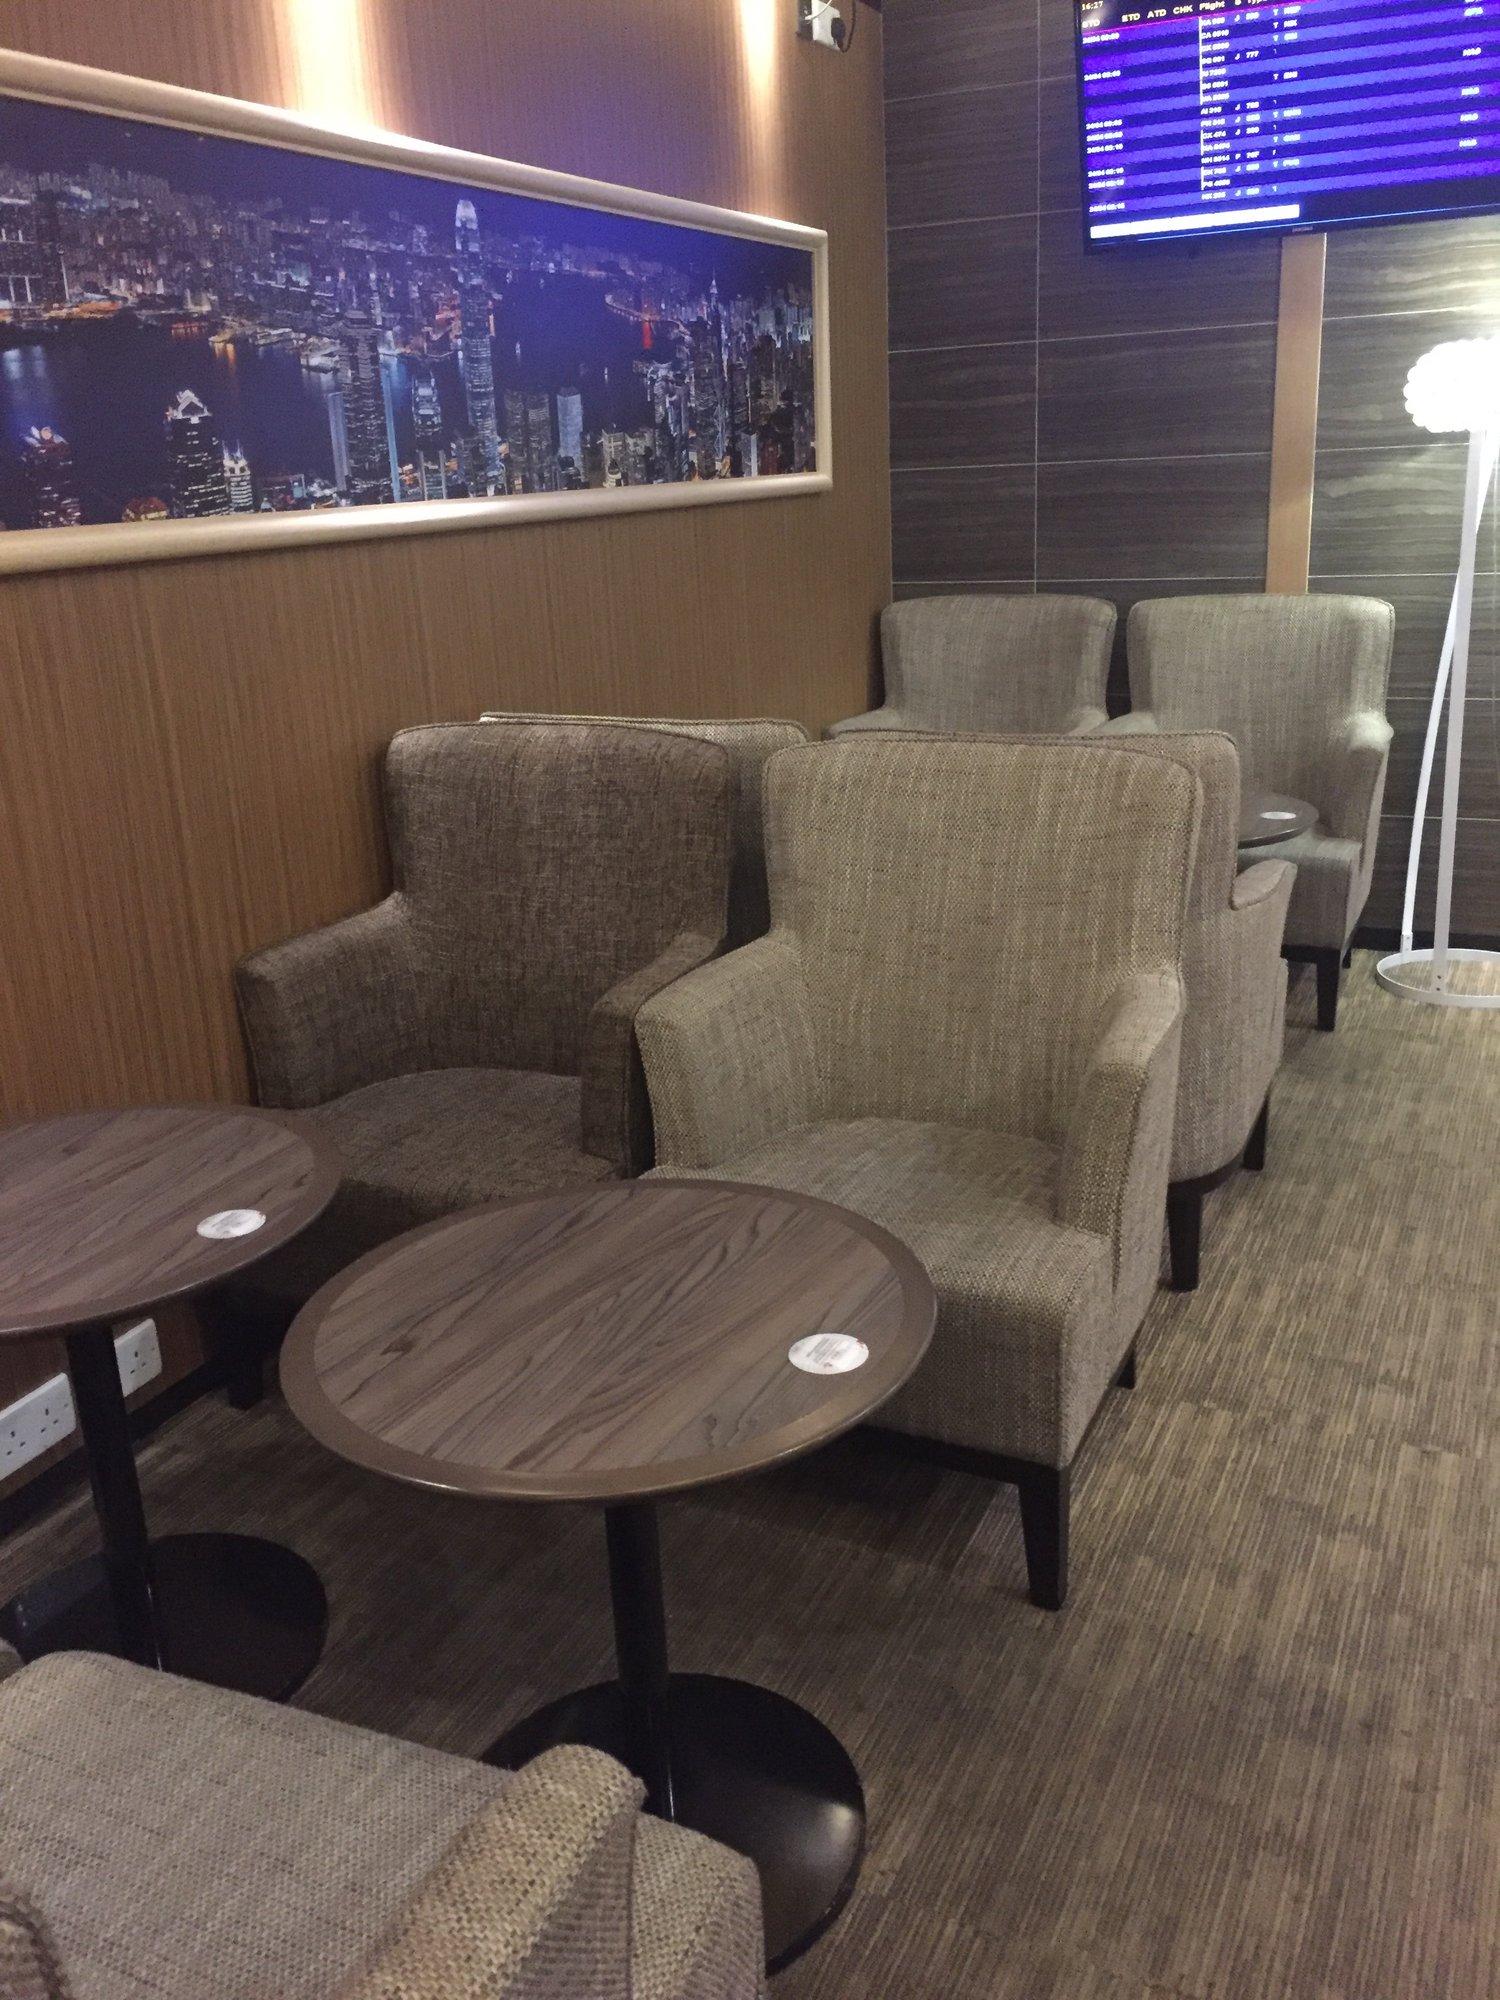 Hong Kong Airlines VIP Lounge (Club Bauhinia) image 21 of 40